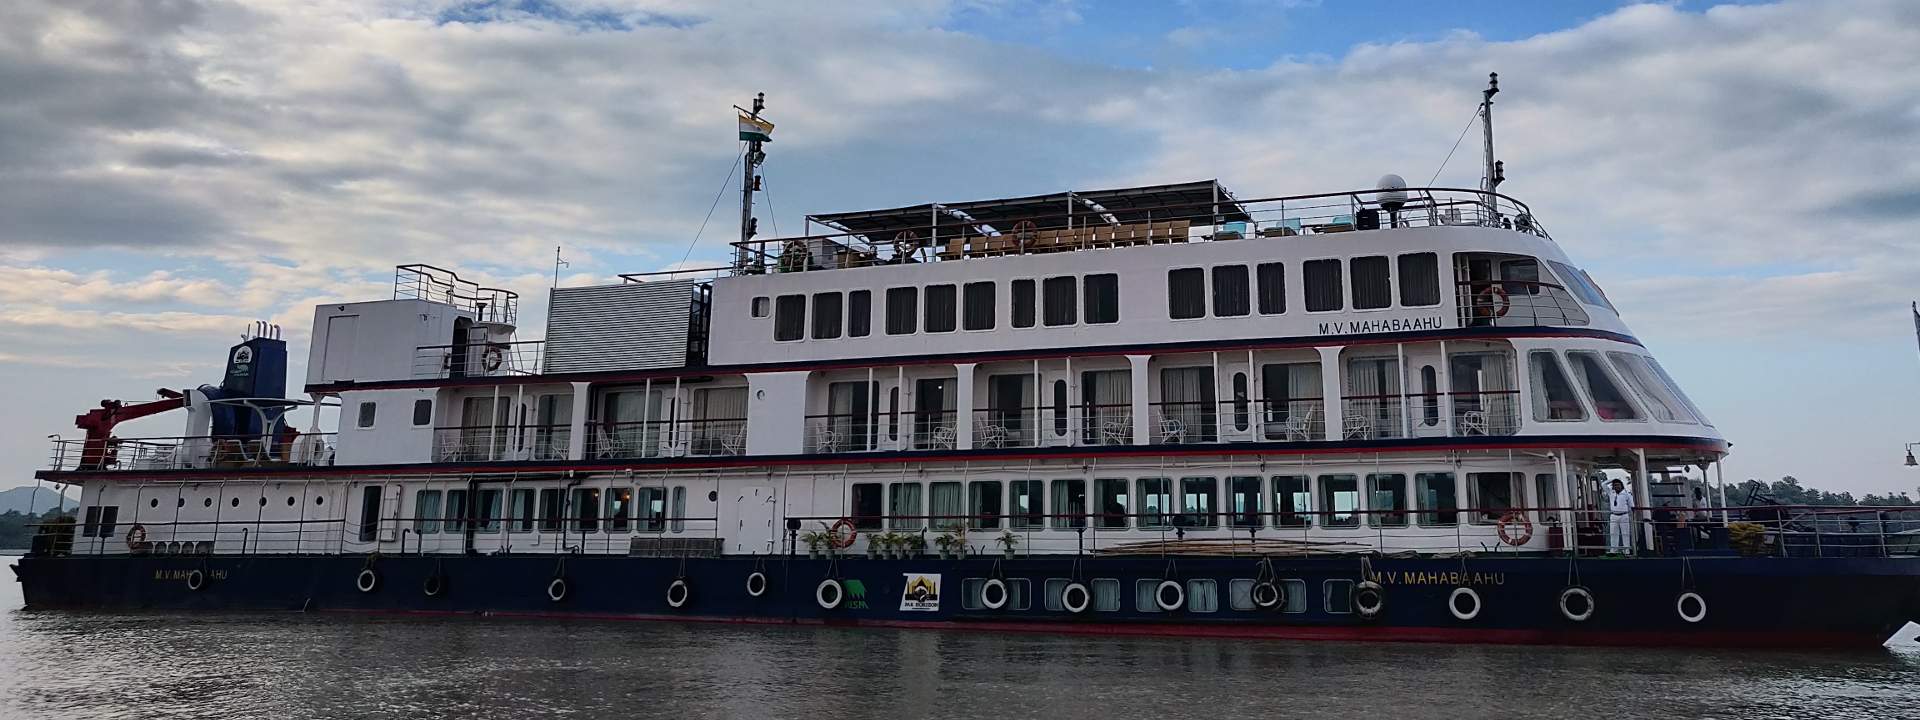 Barco a motor MV Mahabaahu